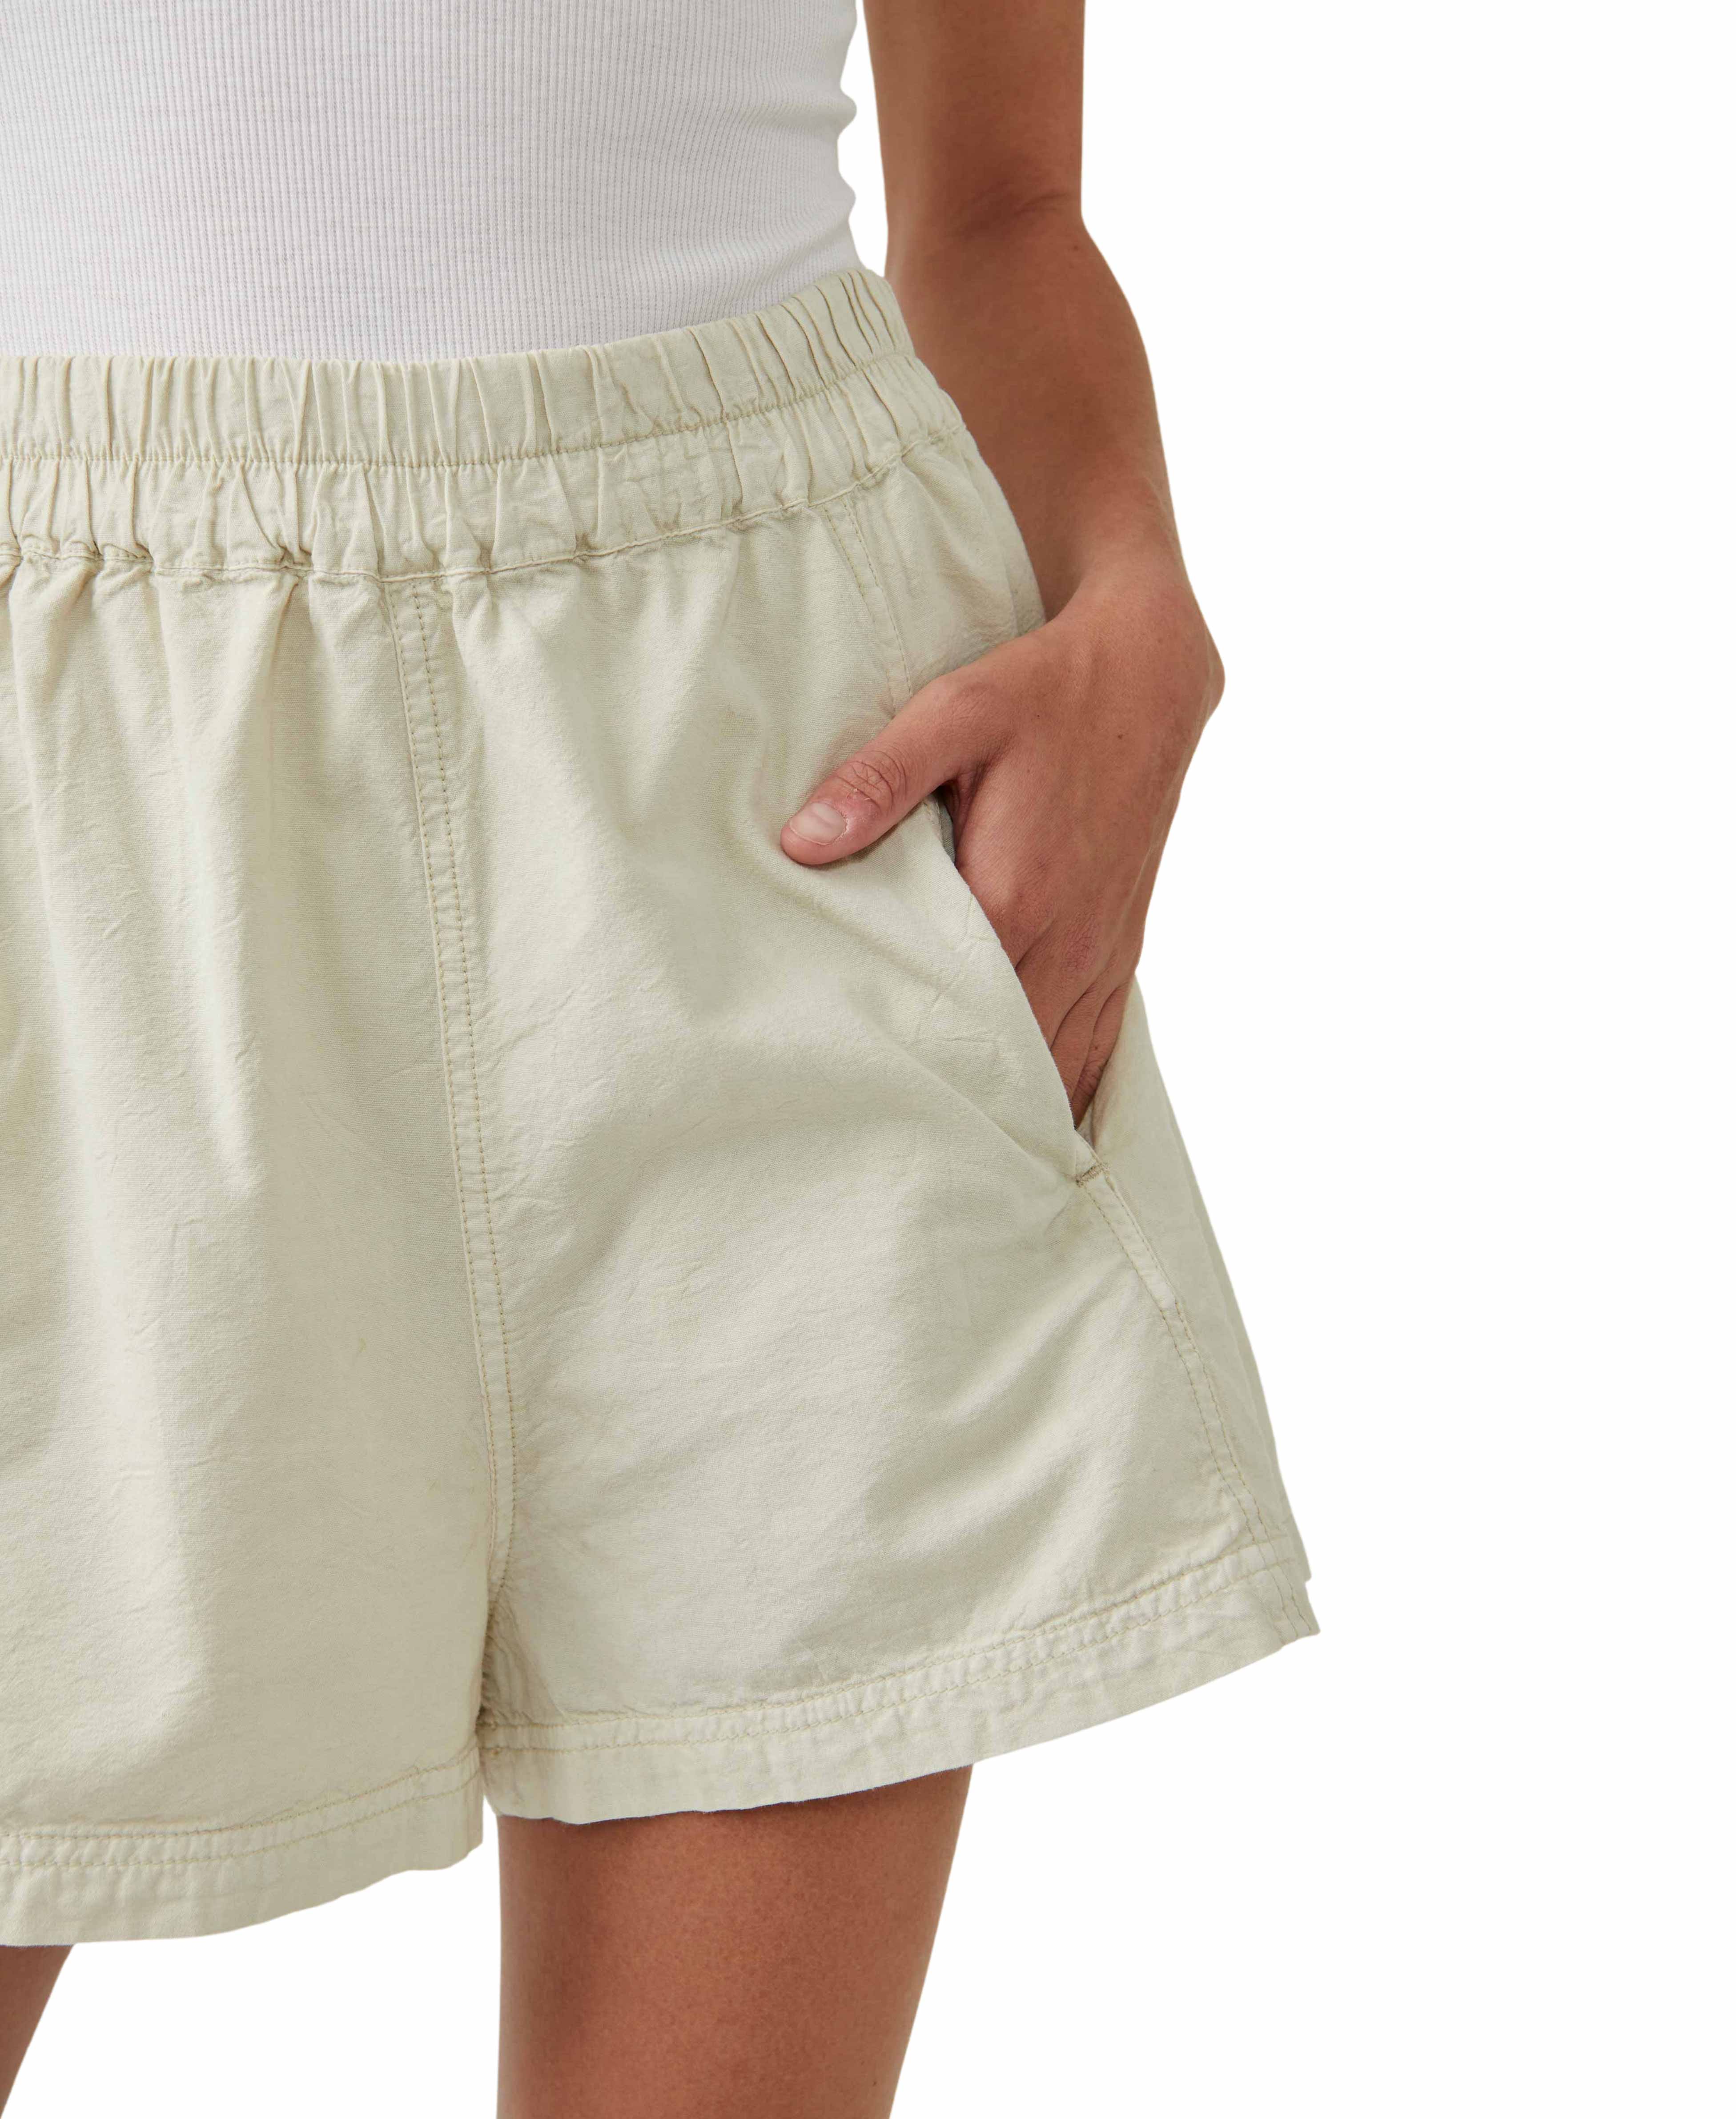 Get Free Poplin Pull-On Shorts